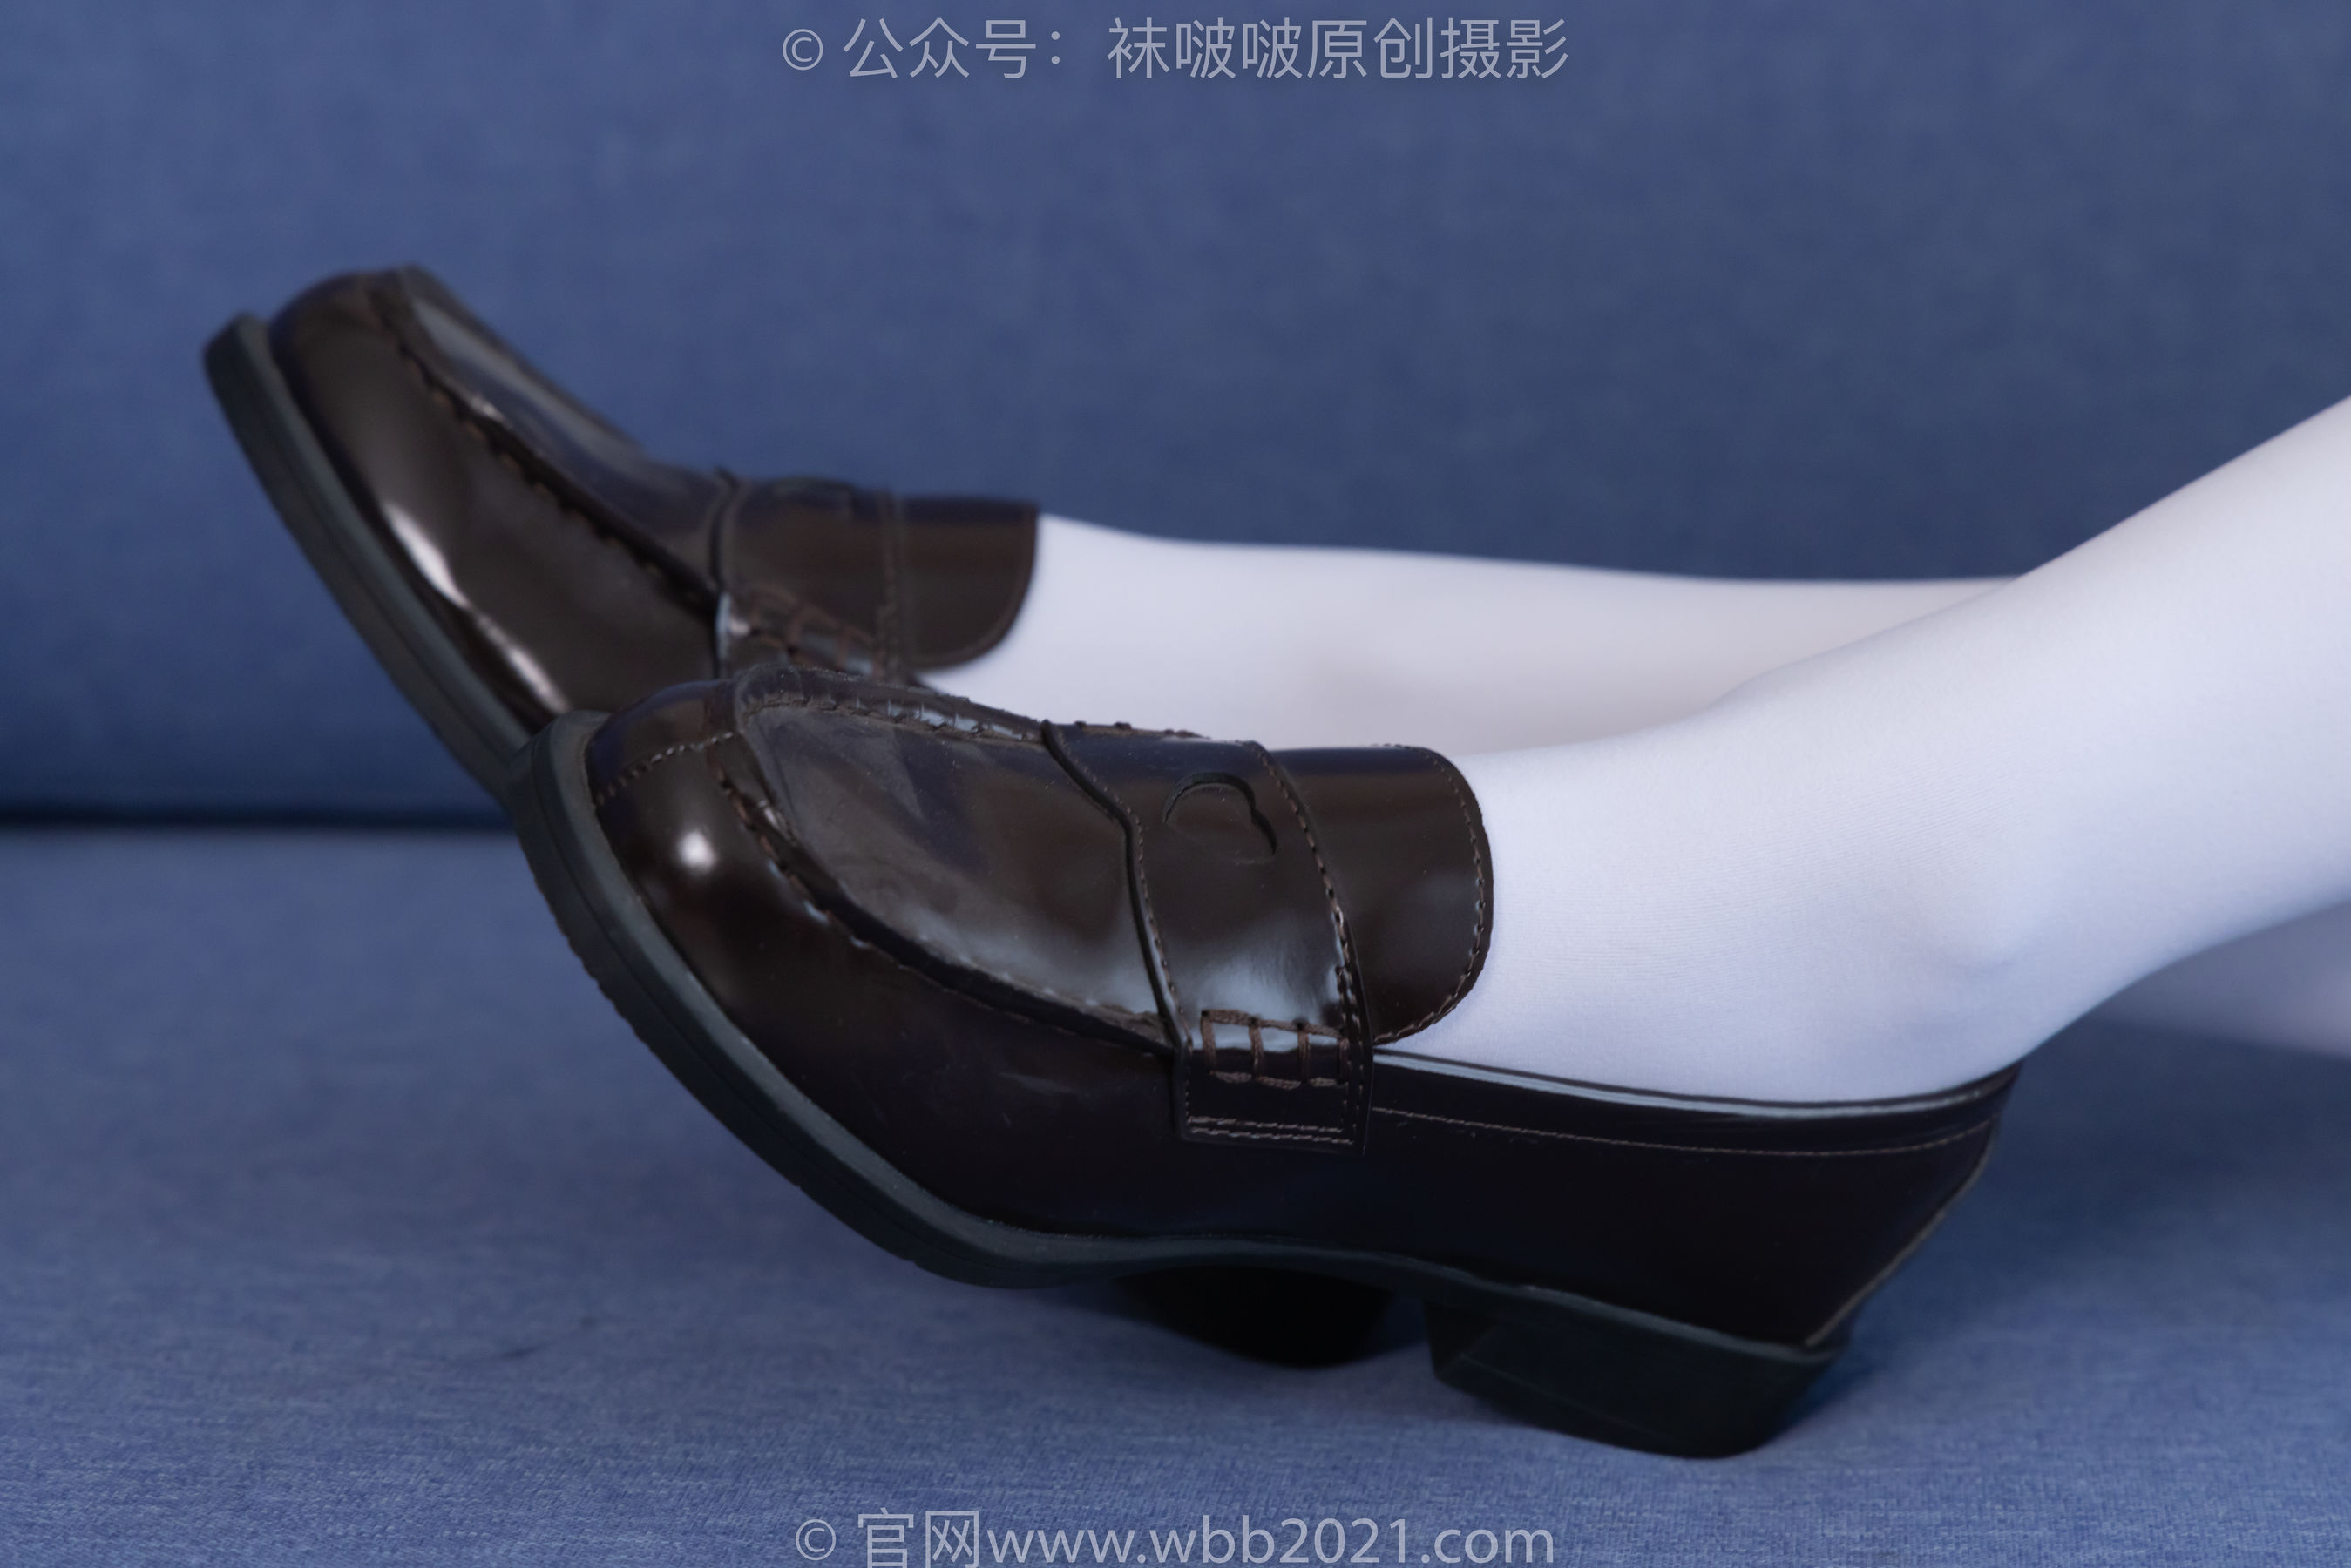 BoBoSocks袜啵啵 No.283 奶油 - 平底鞋、皮鞋、肉丝、厚白丝大腿袜/(140P)